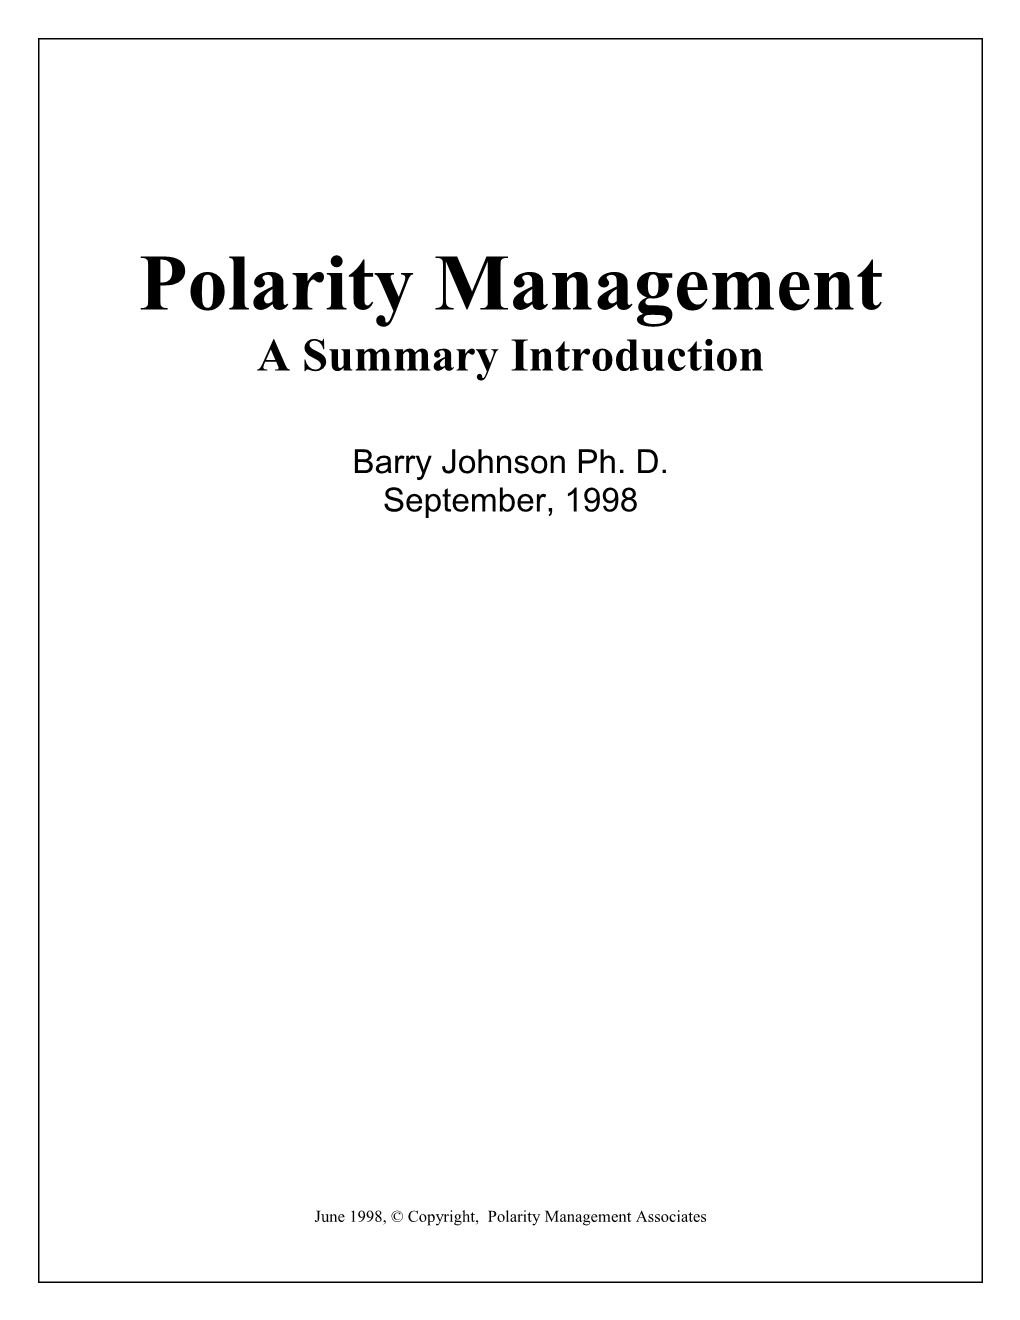 Polarity Management a Summary Introduction